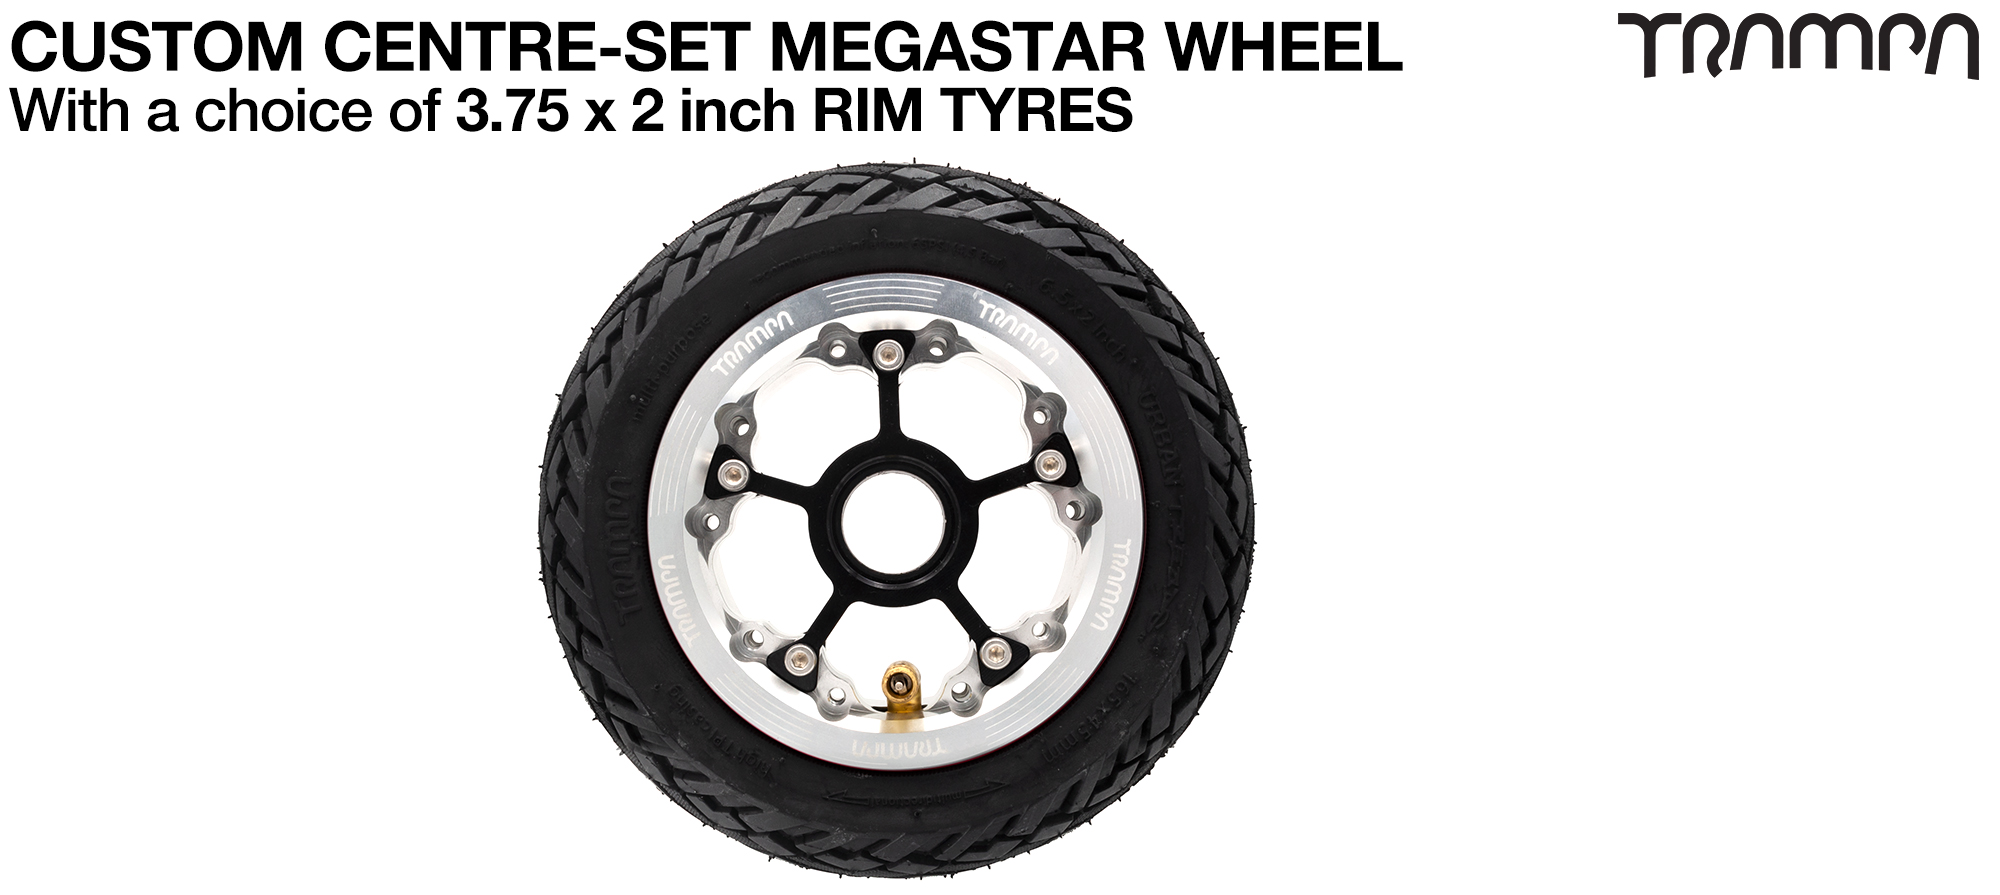 MEGASTAR 8 CENTRE-SET Wheel - 6 Inch URBAN Tyres  (£75)